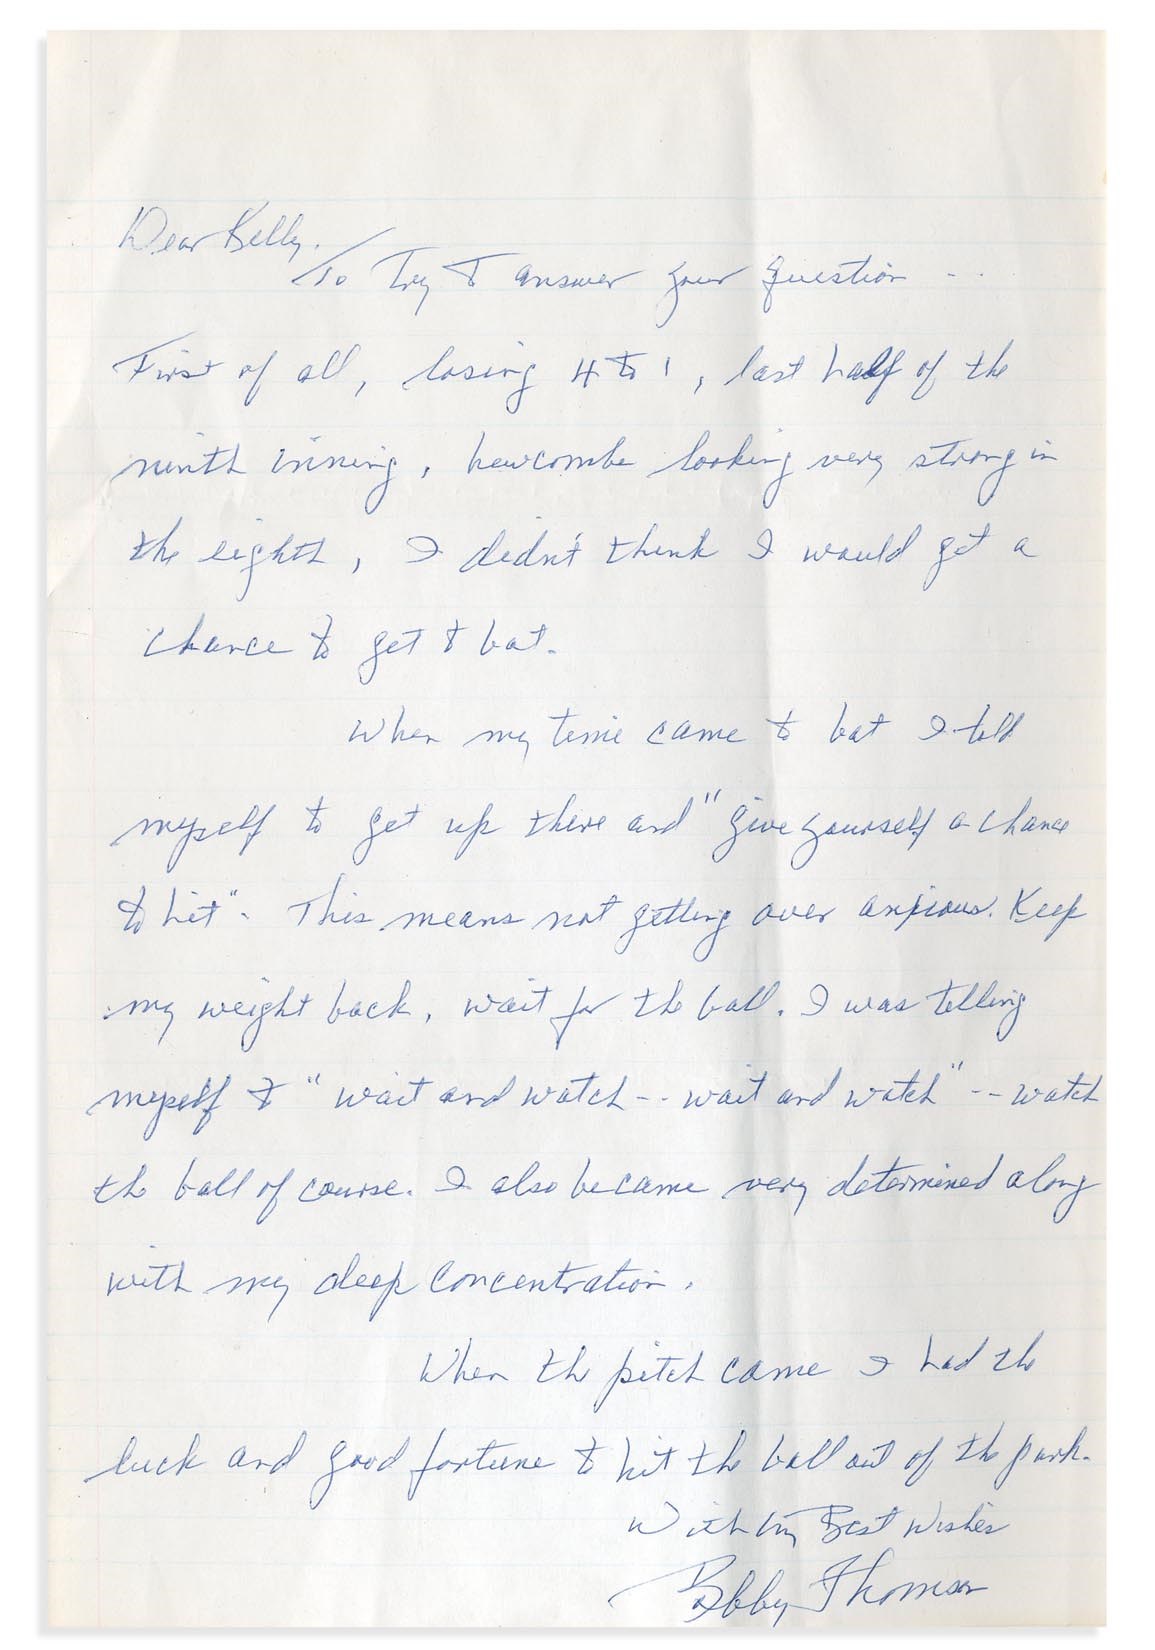 Bobby Thomson Handwritten Letter Detailing "Shot Heard 'Round the World"